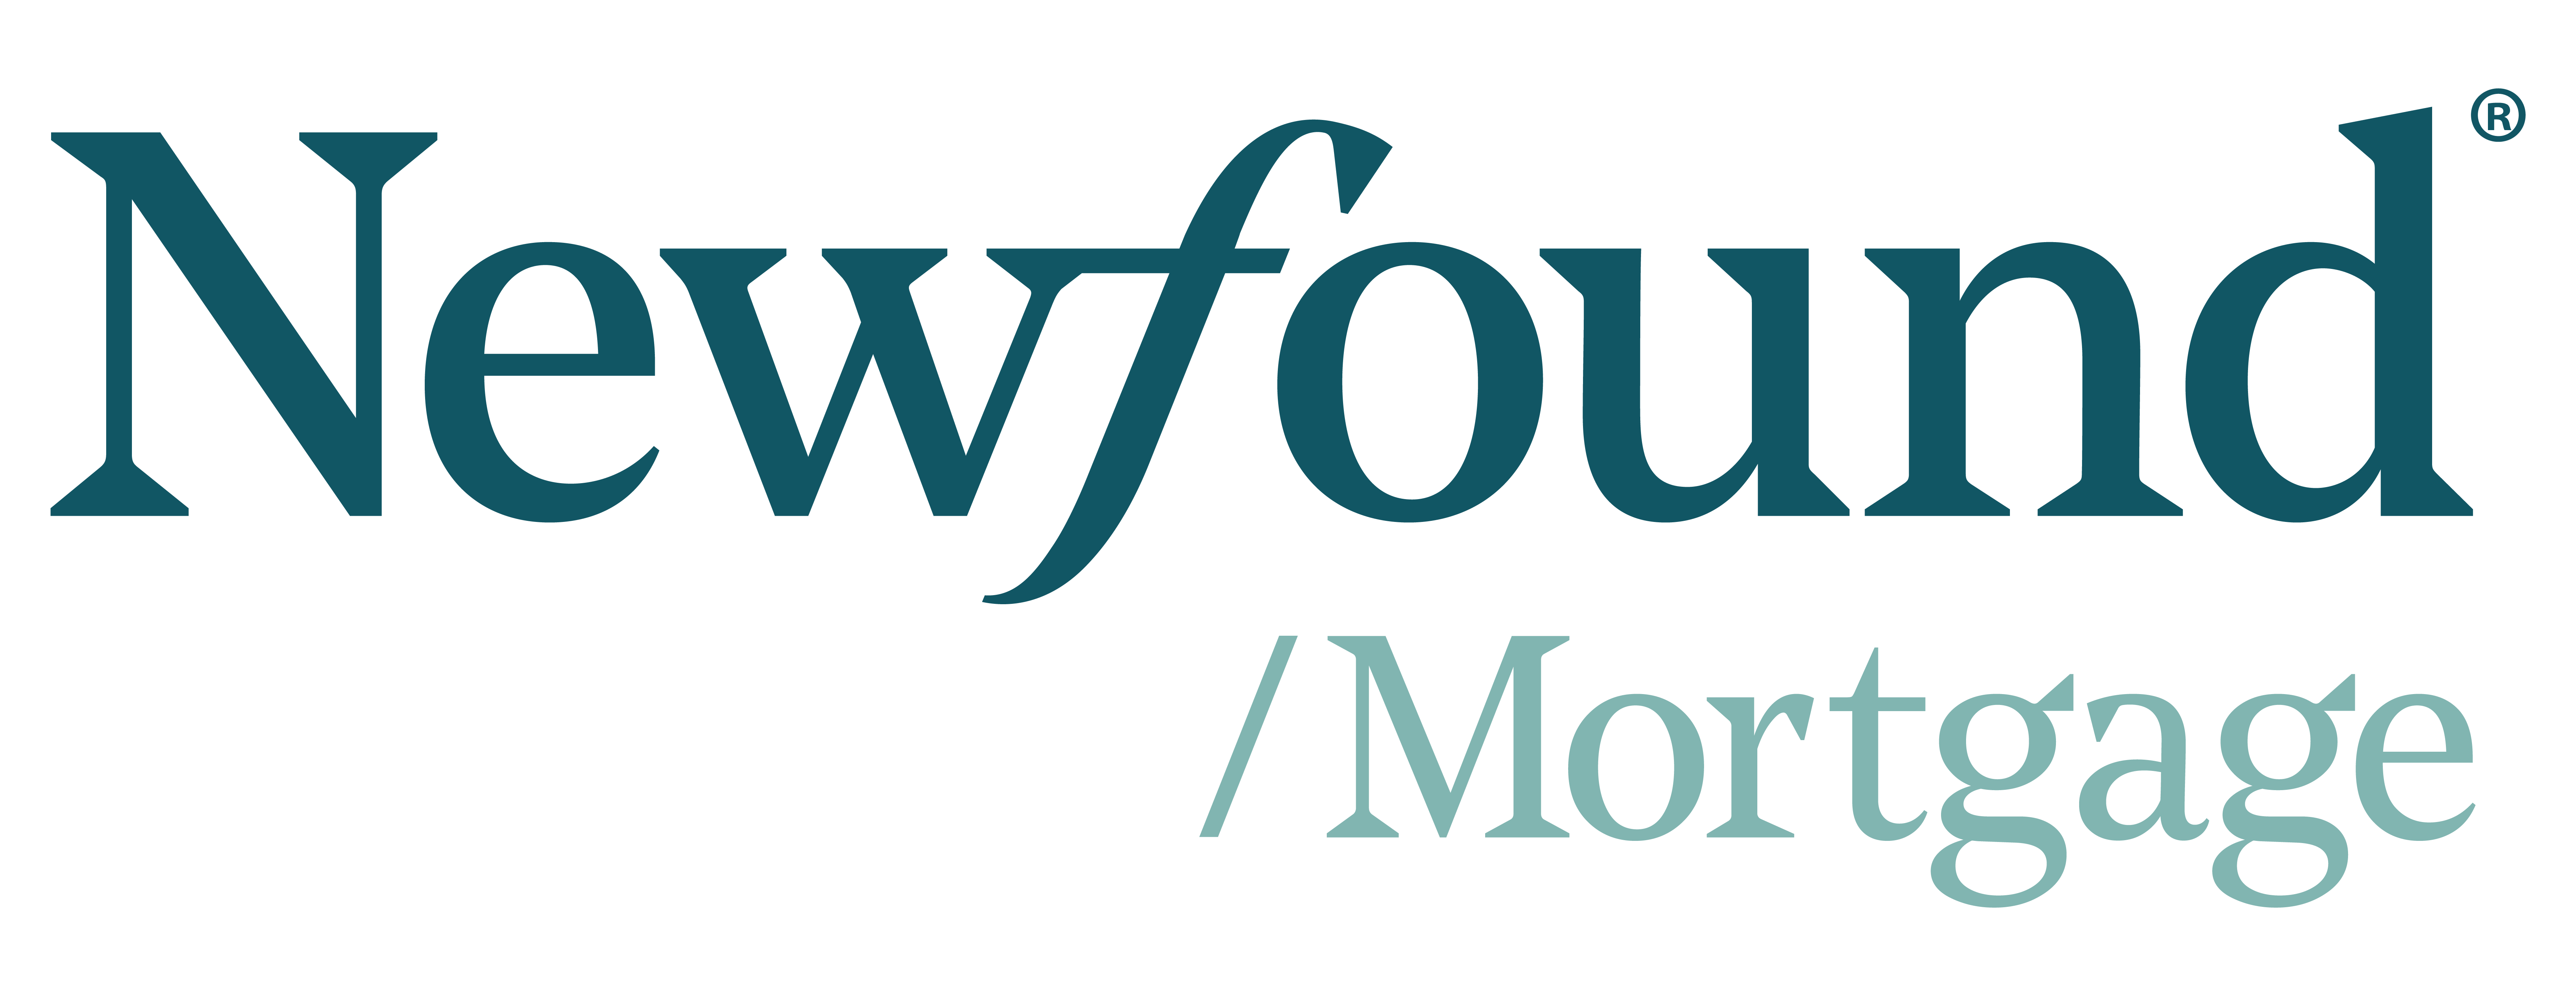 NewfoundMortgage_Logo_vertical